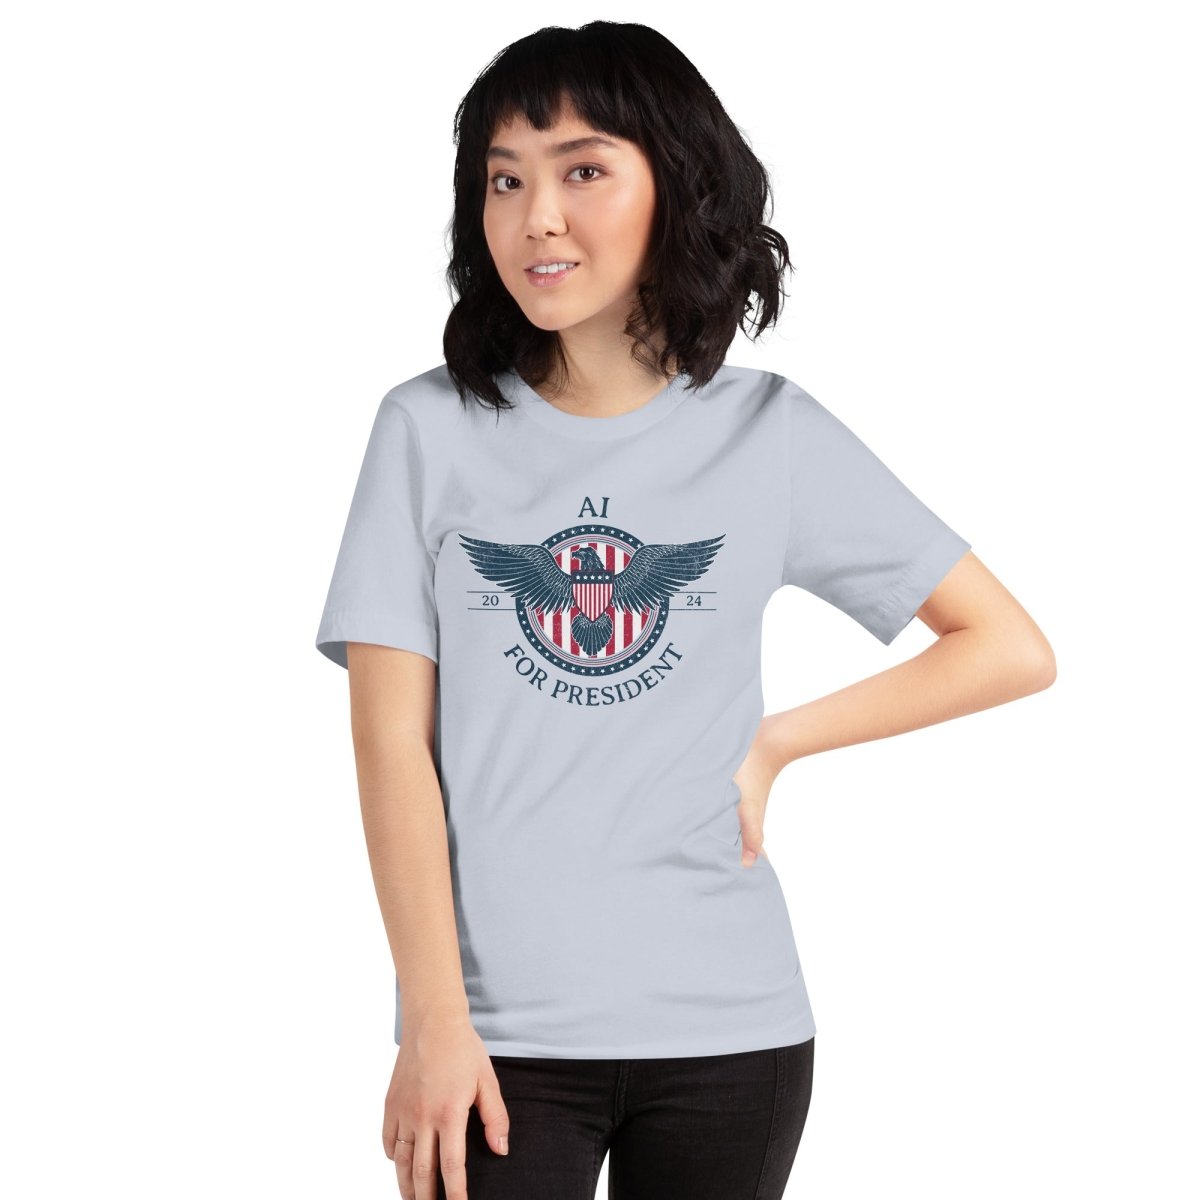 AI for President 2024 T - Shirt (unisex) - Light Blue - AI Store